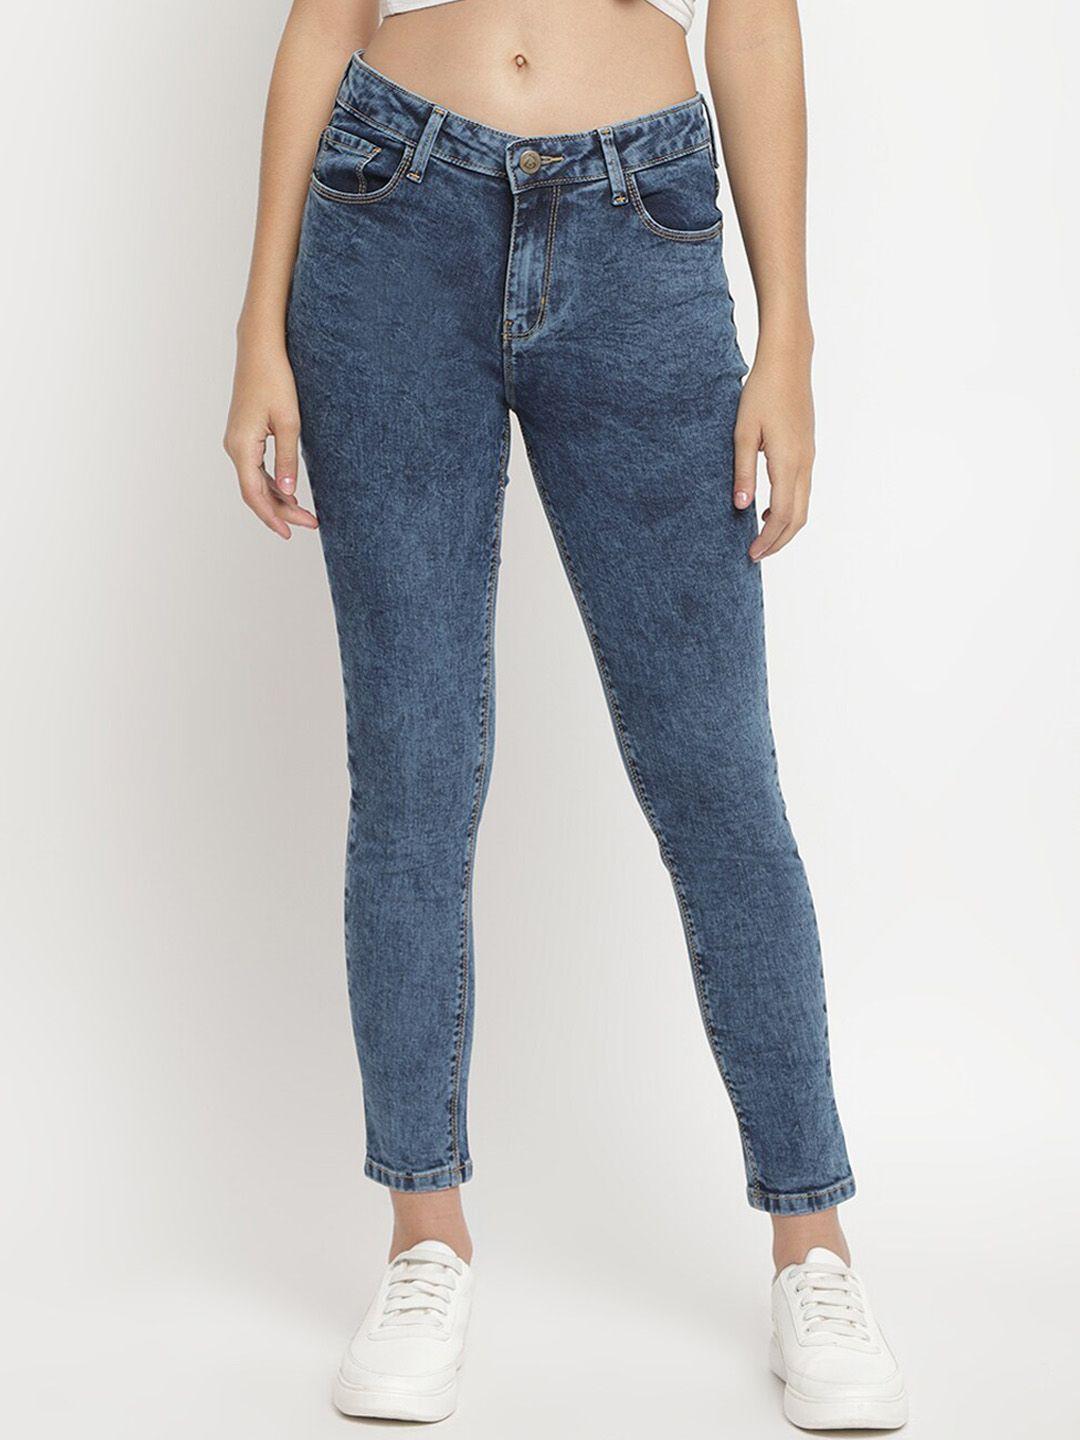 belliskey women blue slim fit mid-rise clean look jeans